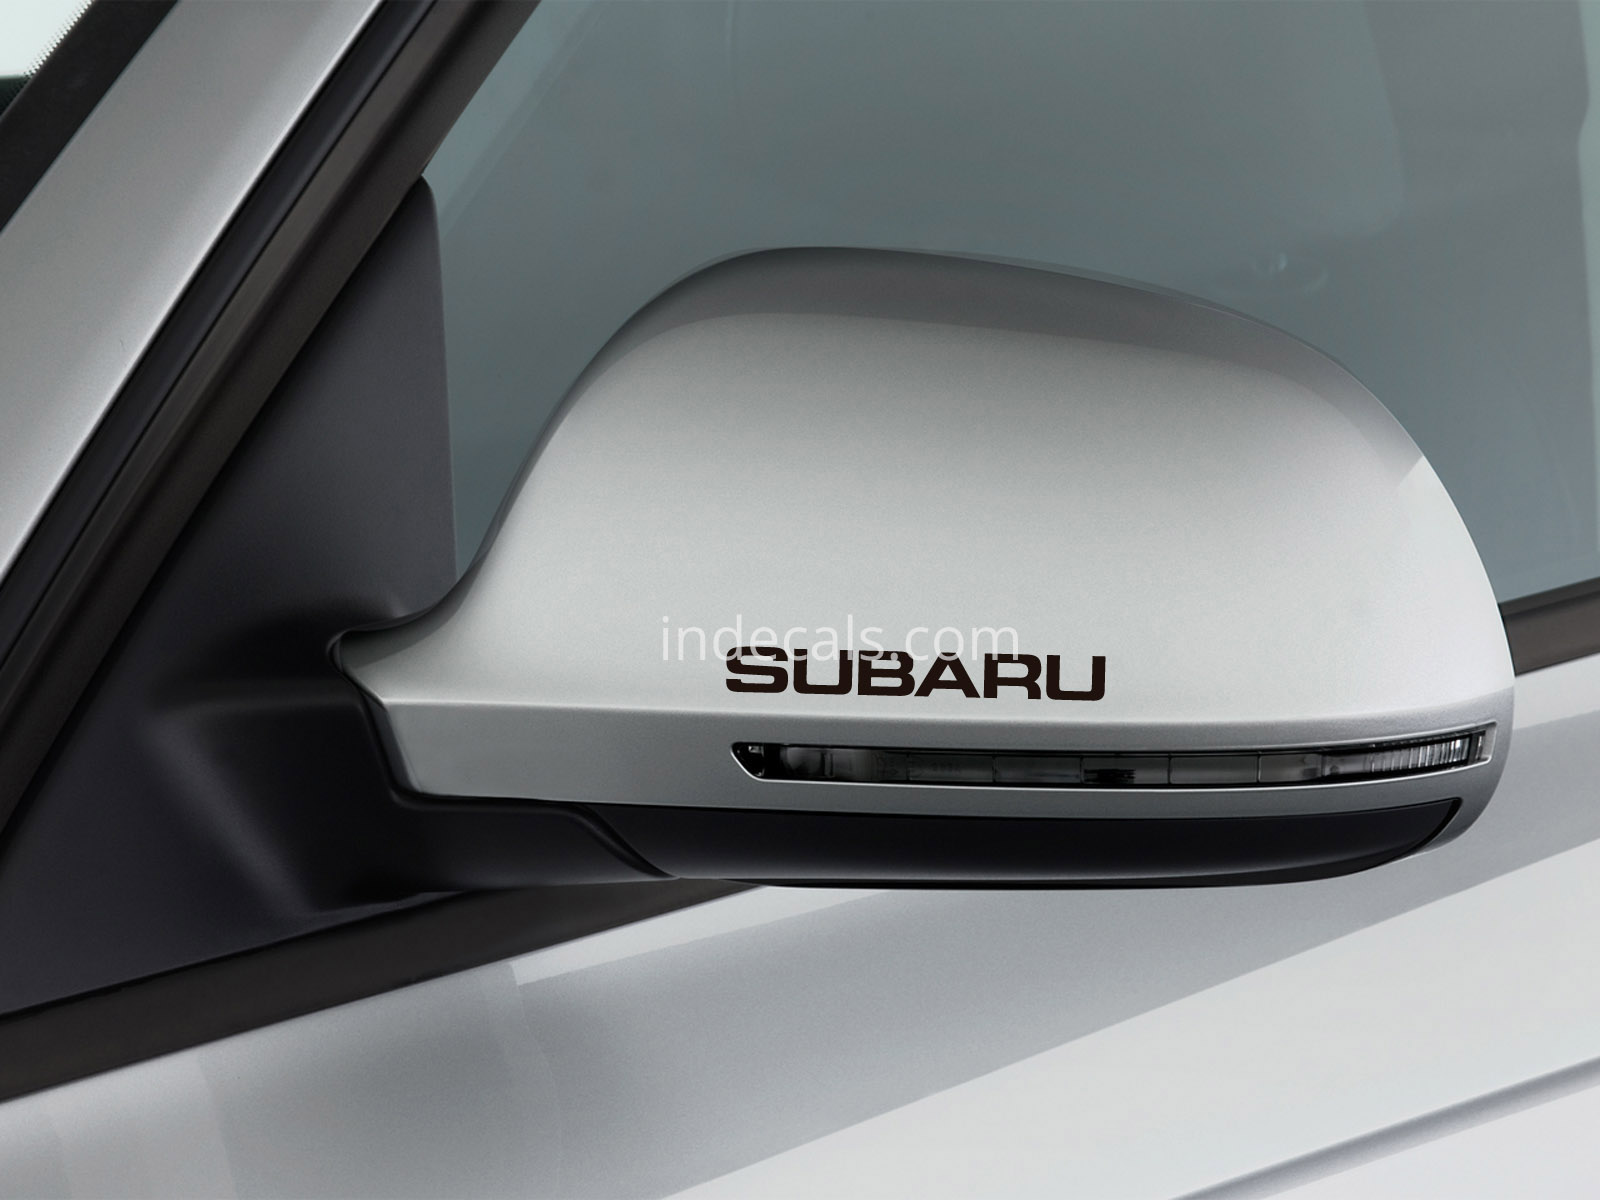 3 x Subaru Stickers for Mirrors - Black